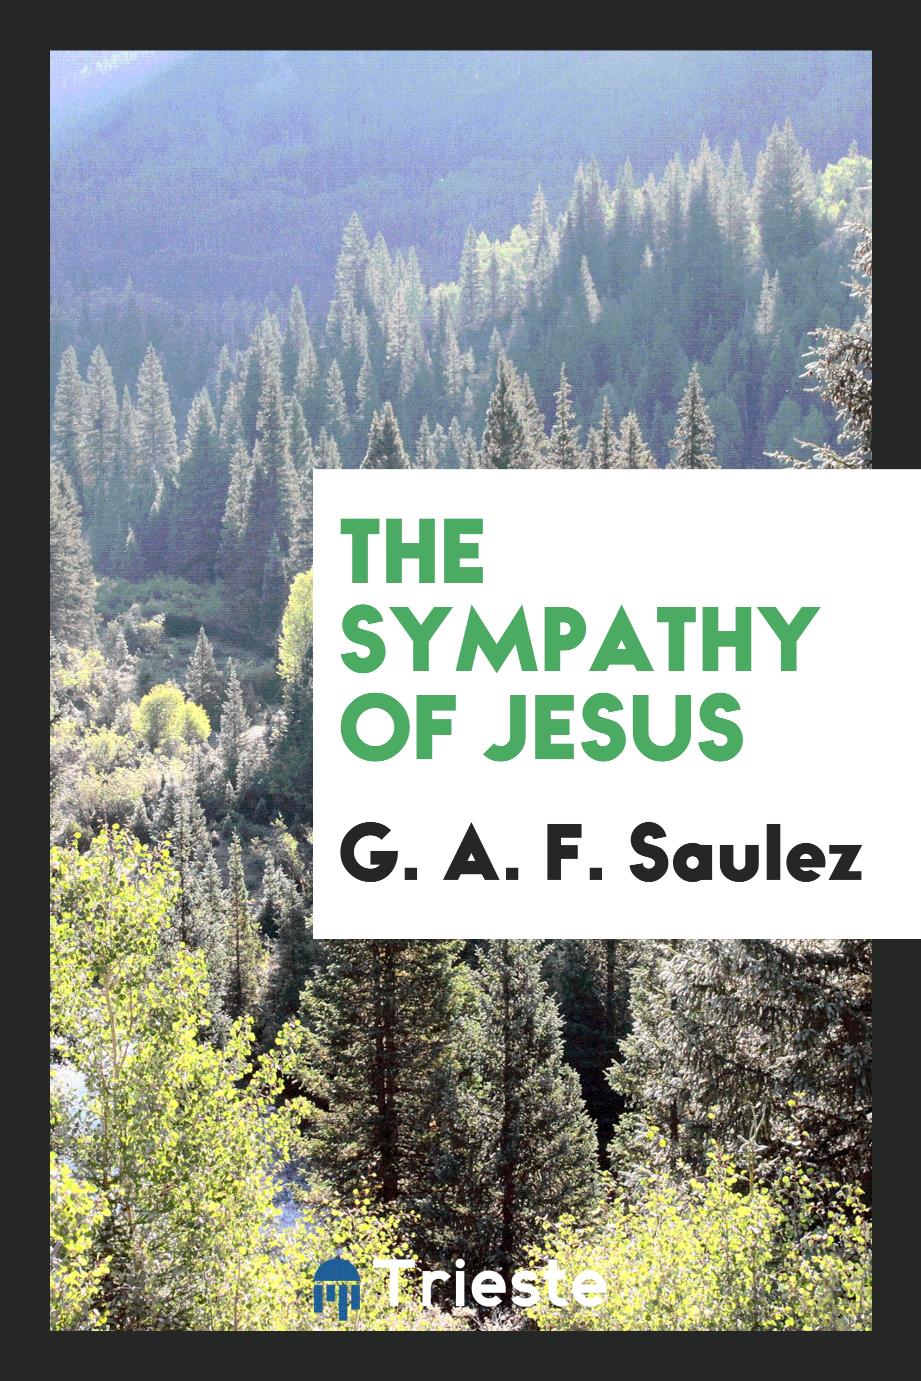 The sympathy of Jesus